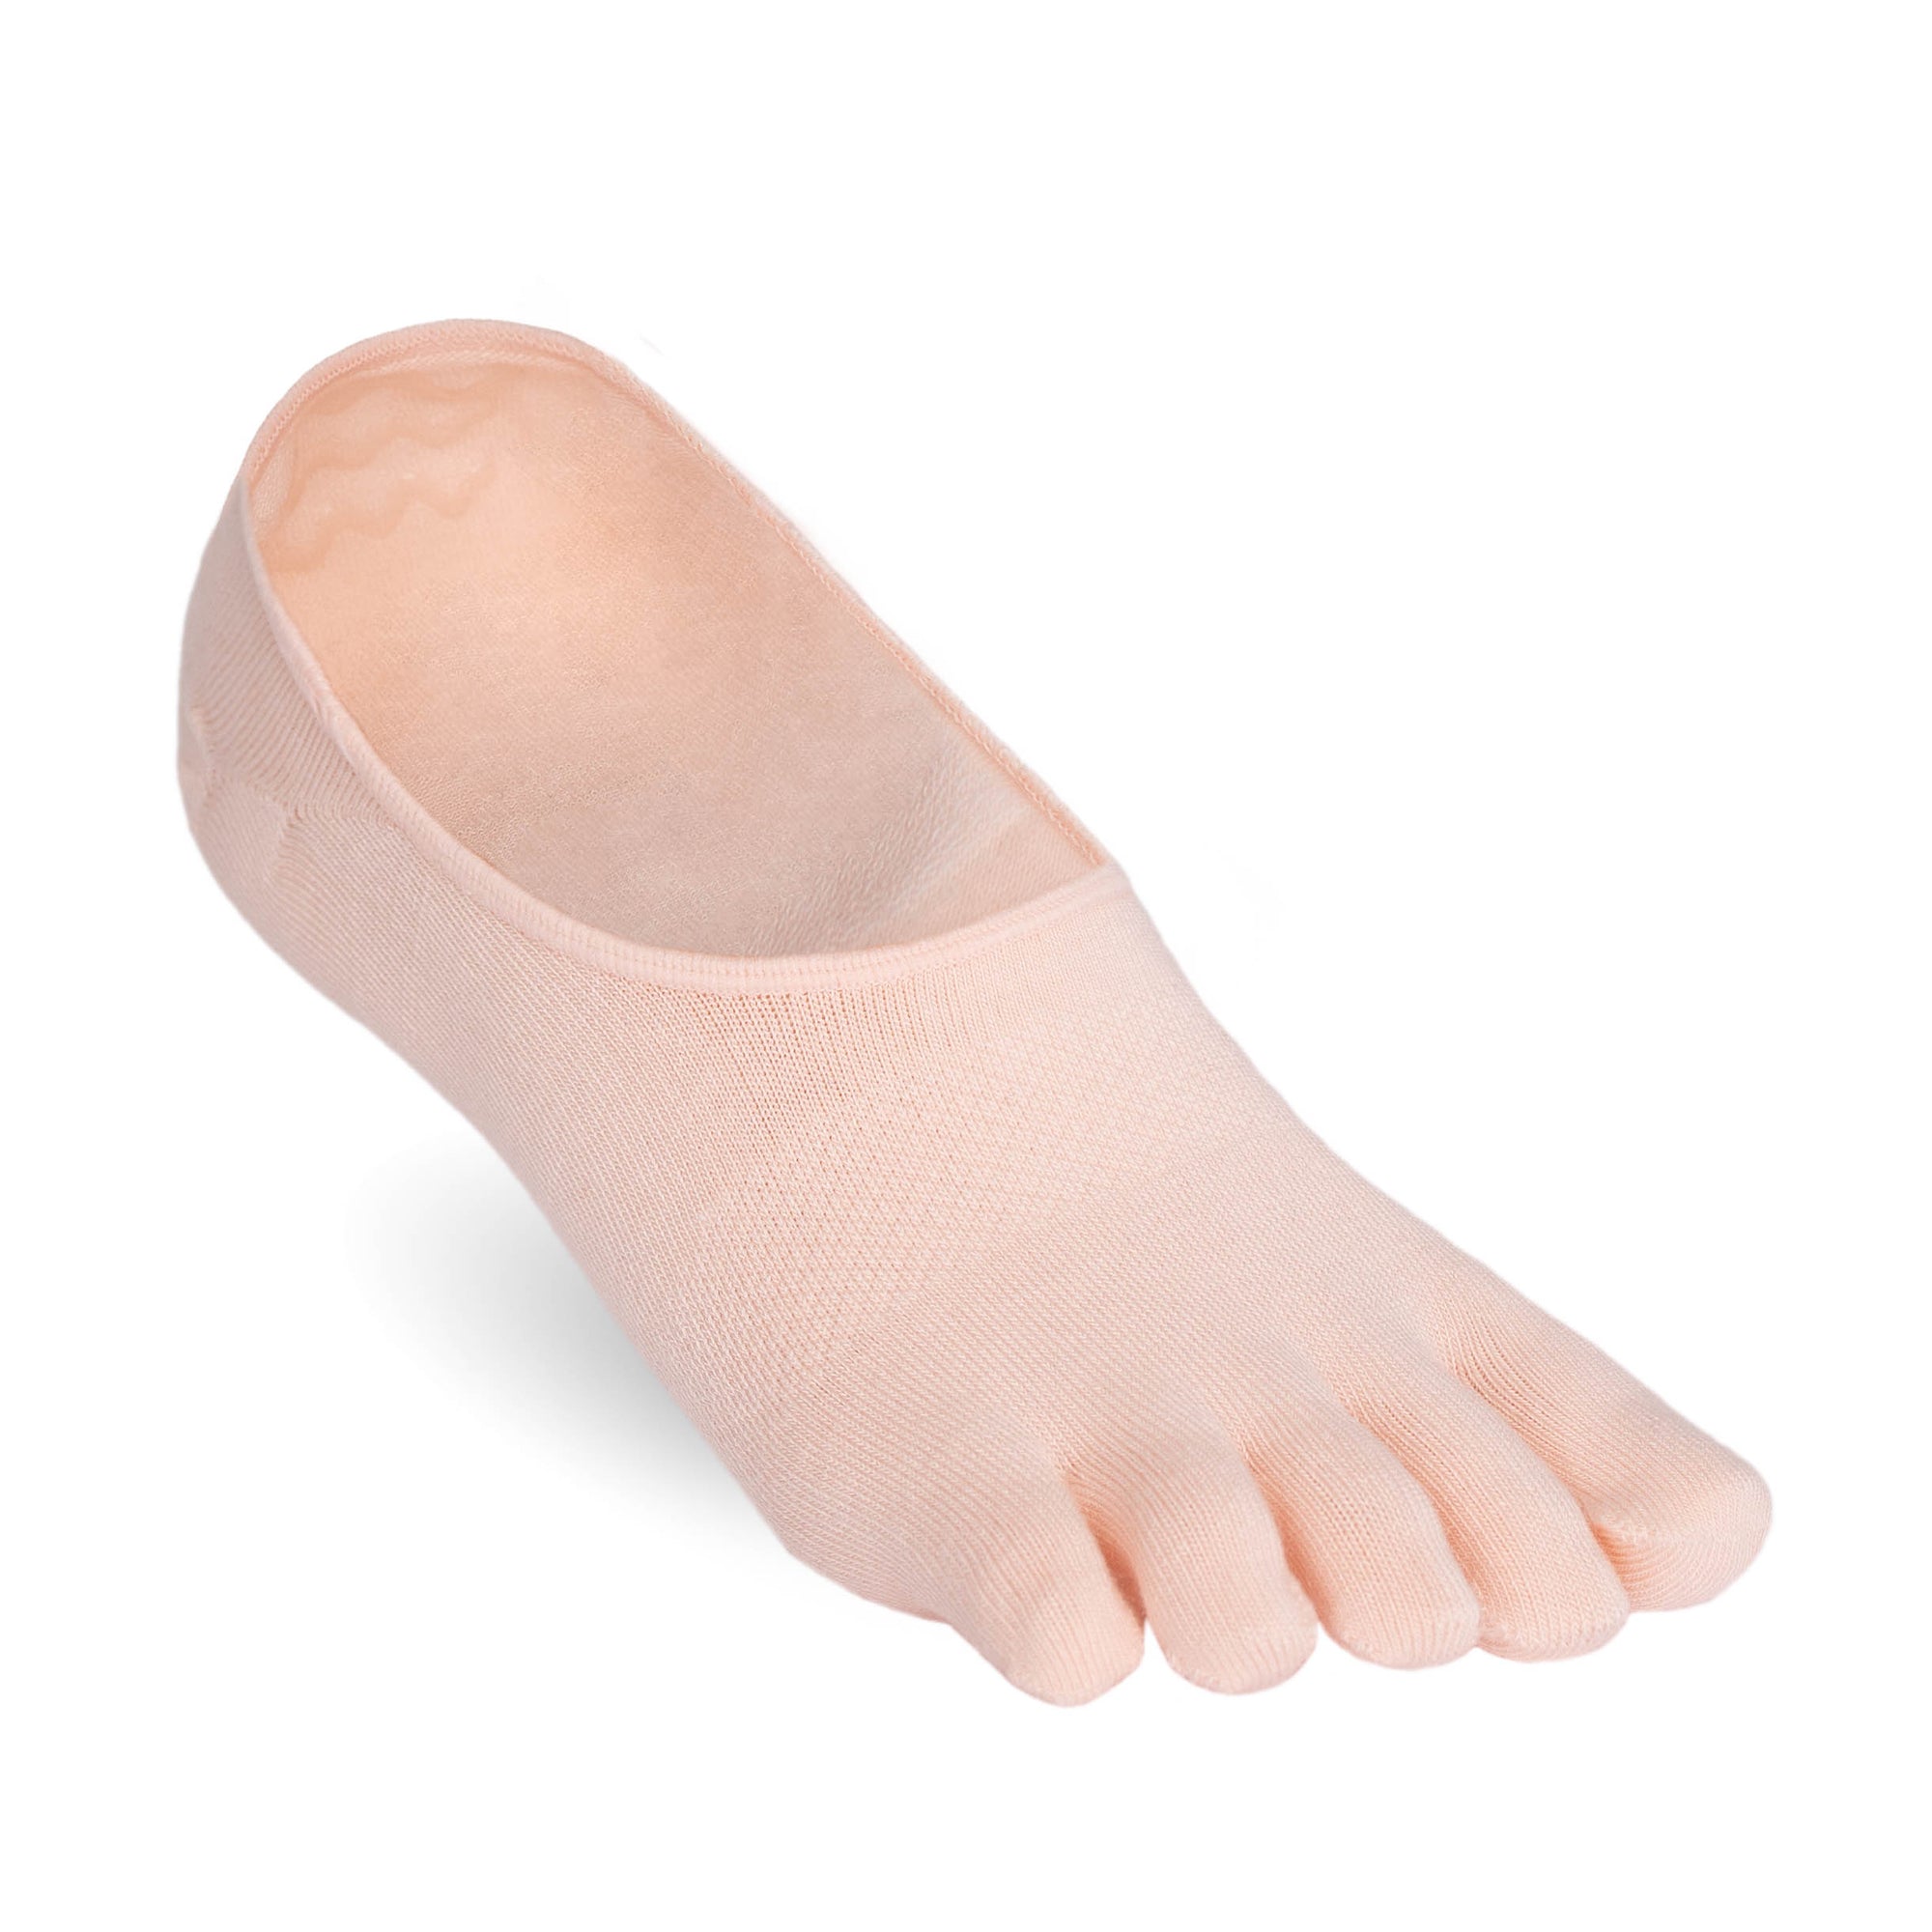 Serasox Model 2 Ankle Socks